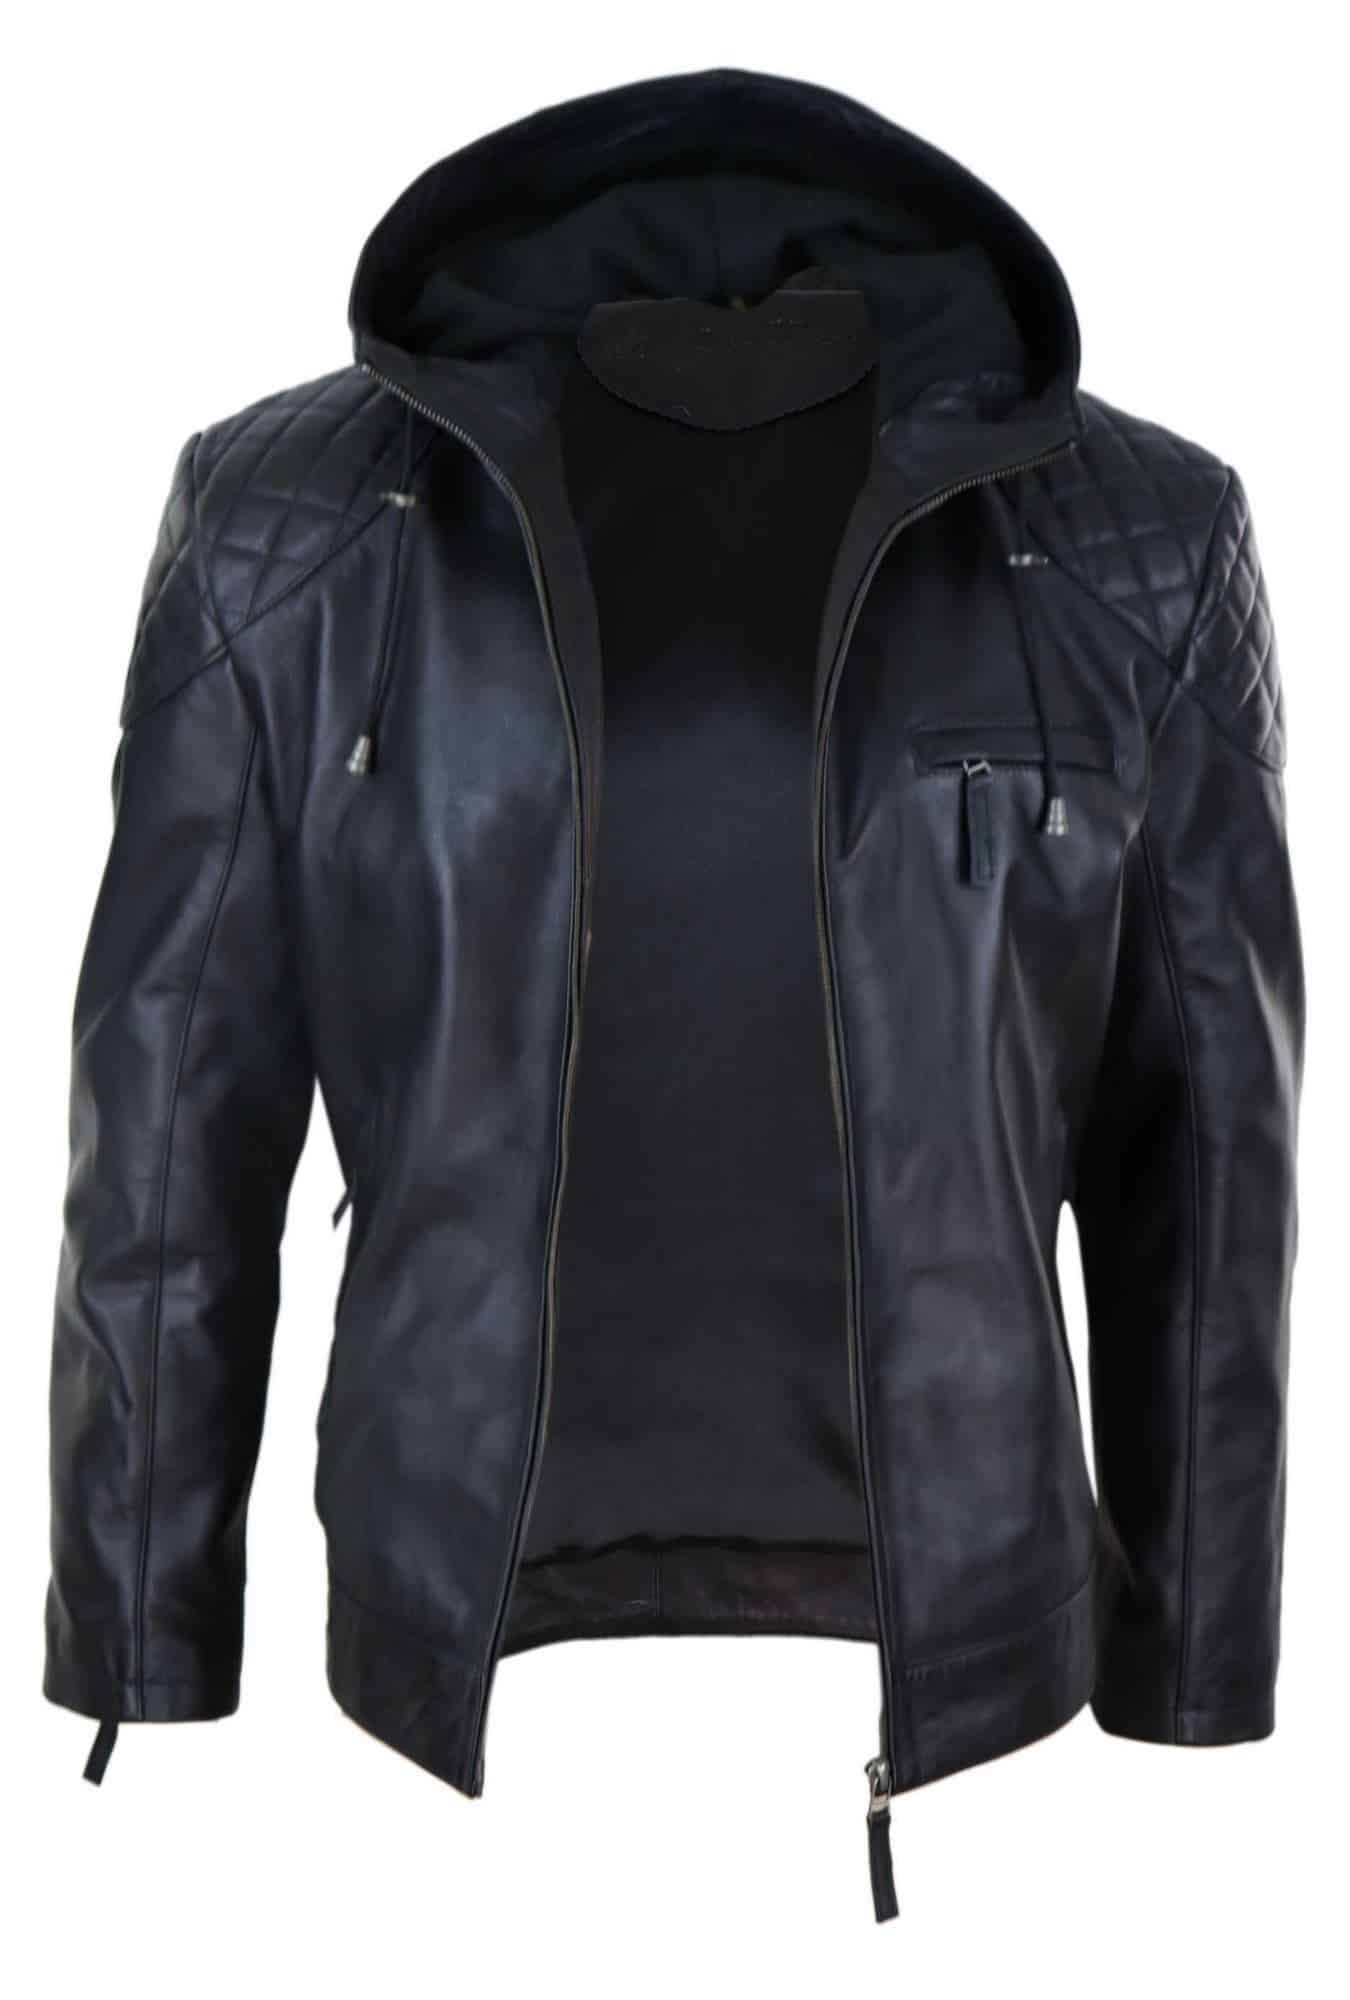 Mens Hooded Biker Leather Jacket - Black: Buy Online - Happy Gentleman